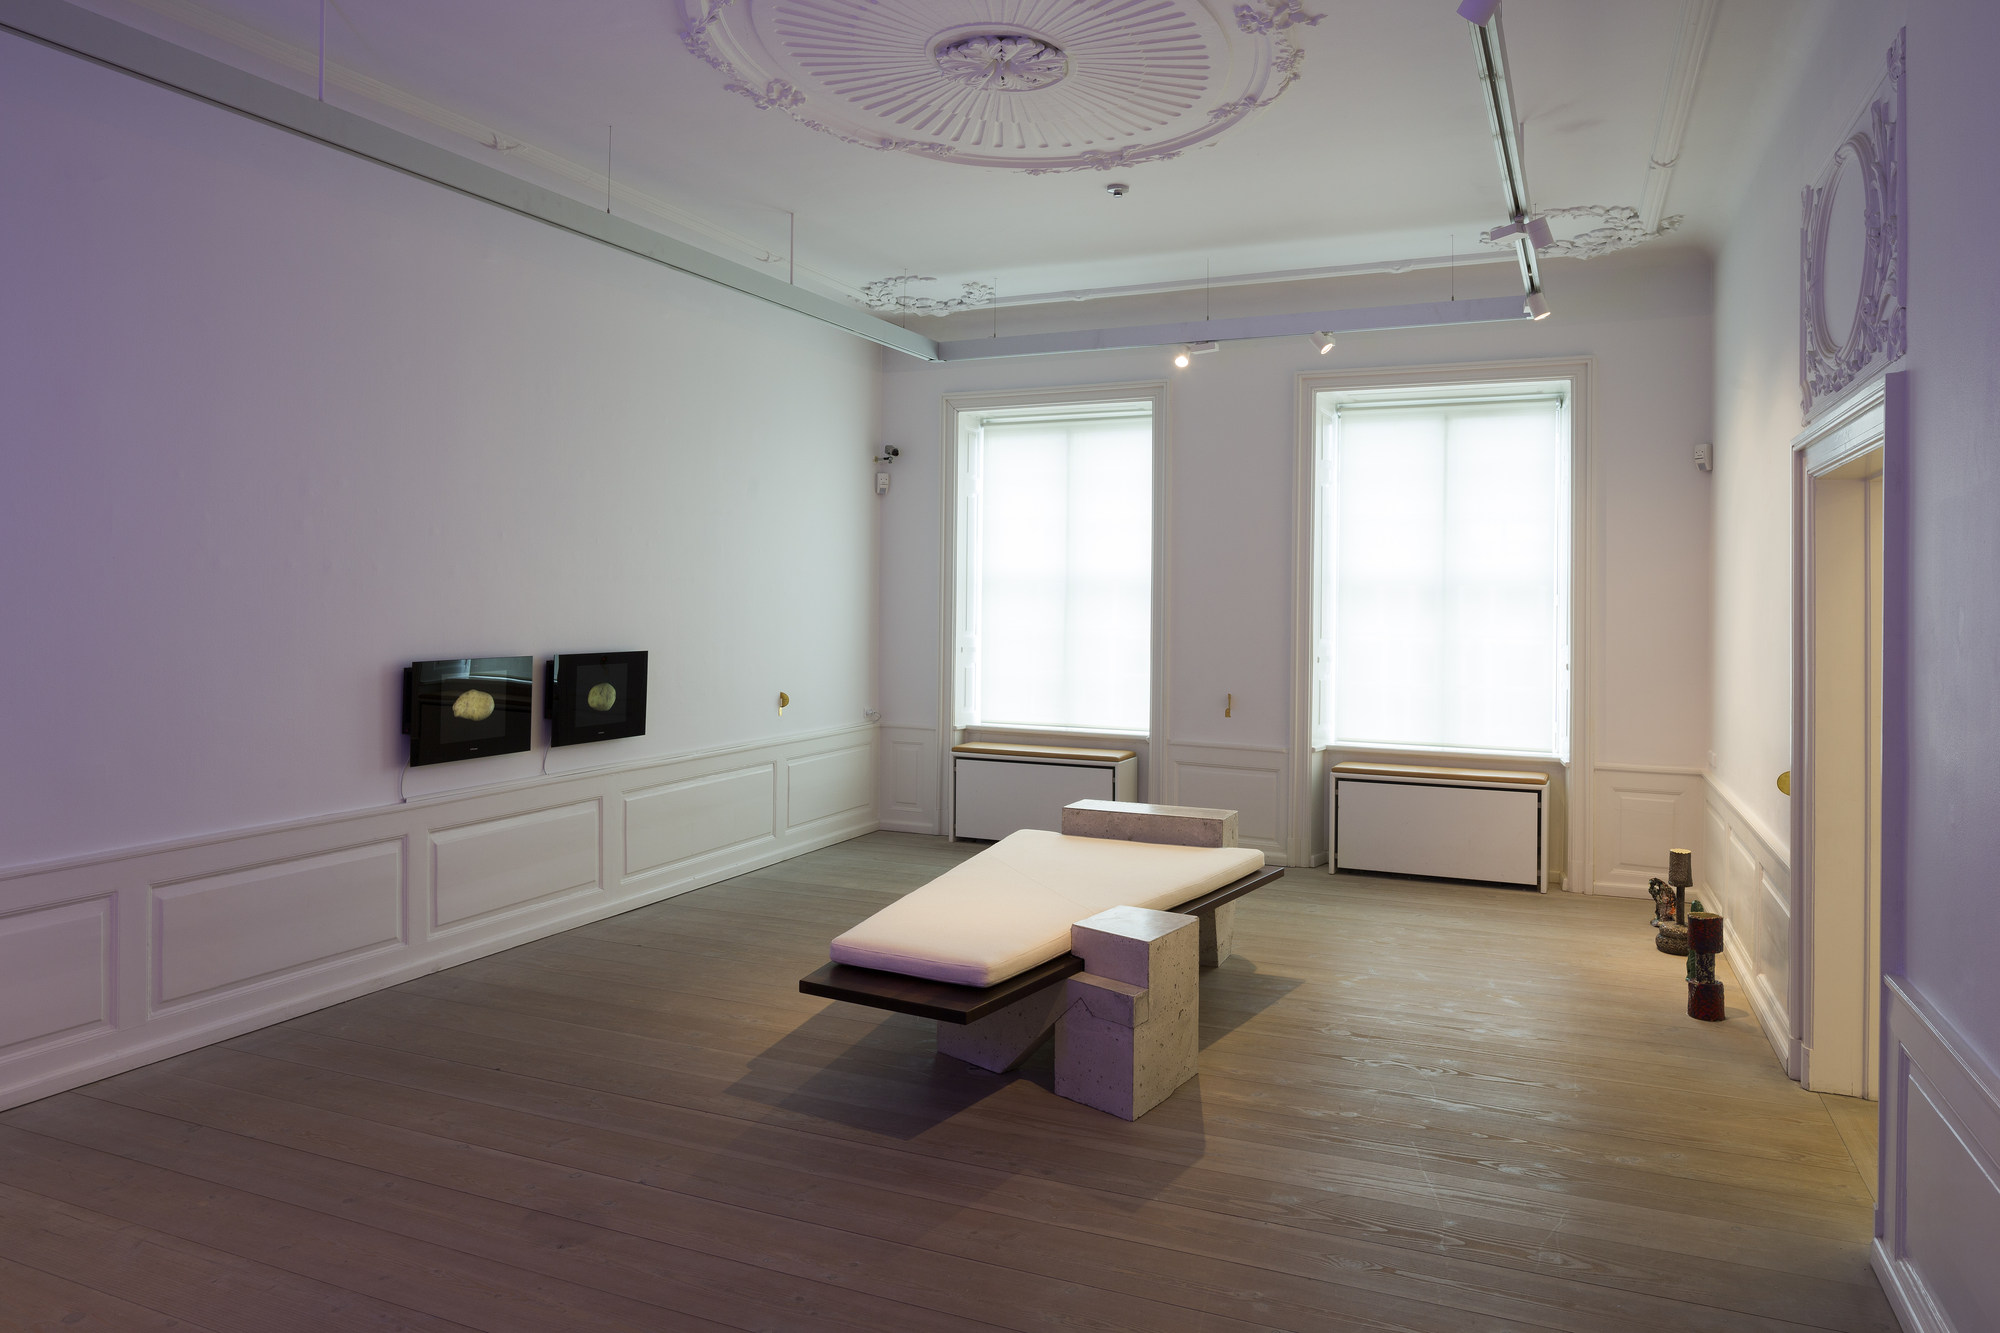 The Salon.installationview. credit Torben Eskerod2